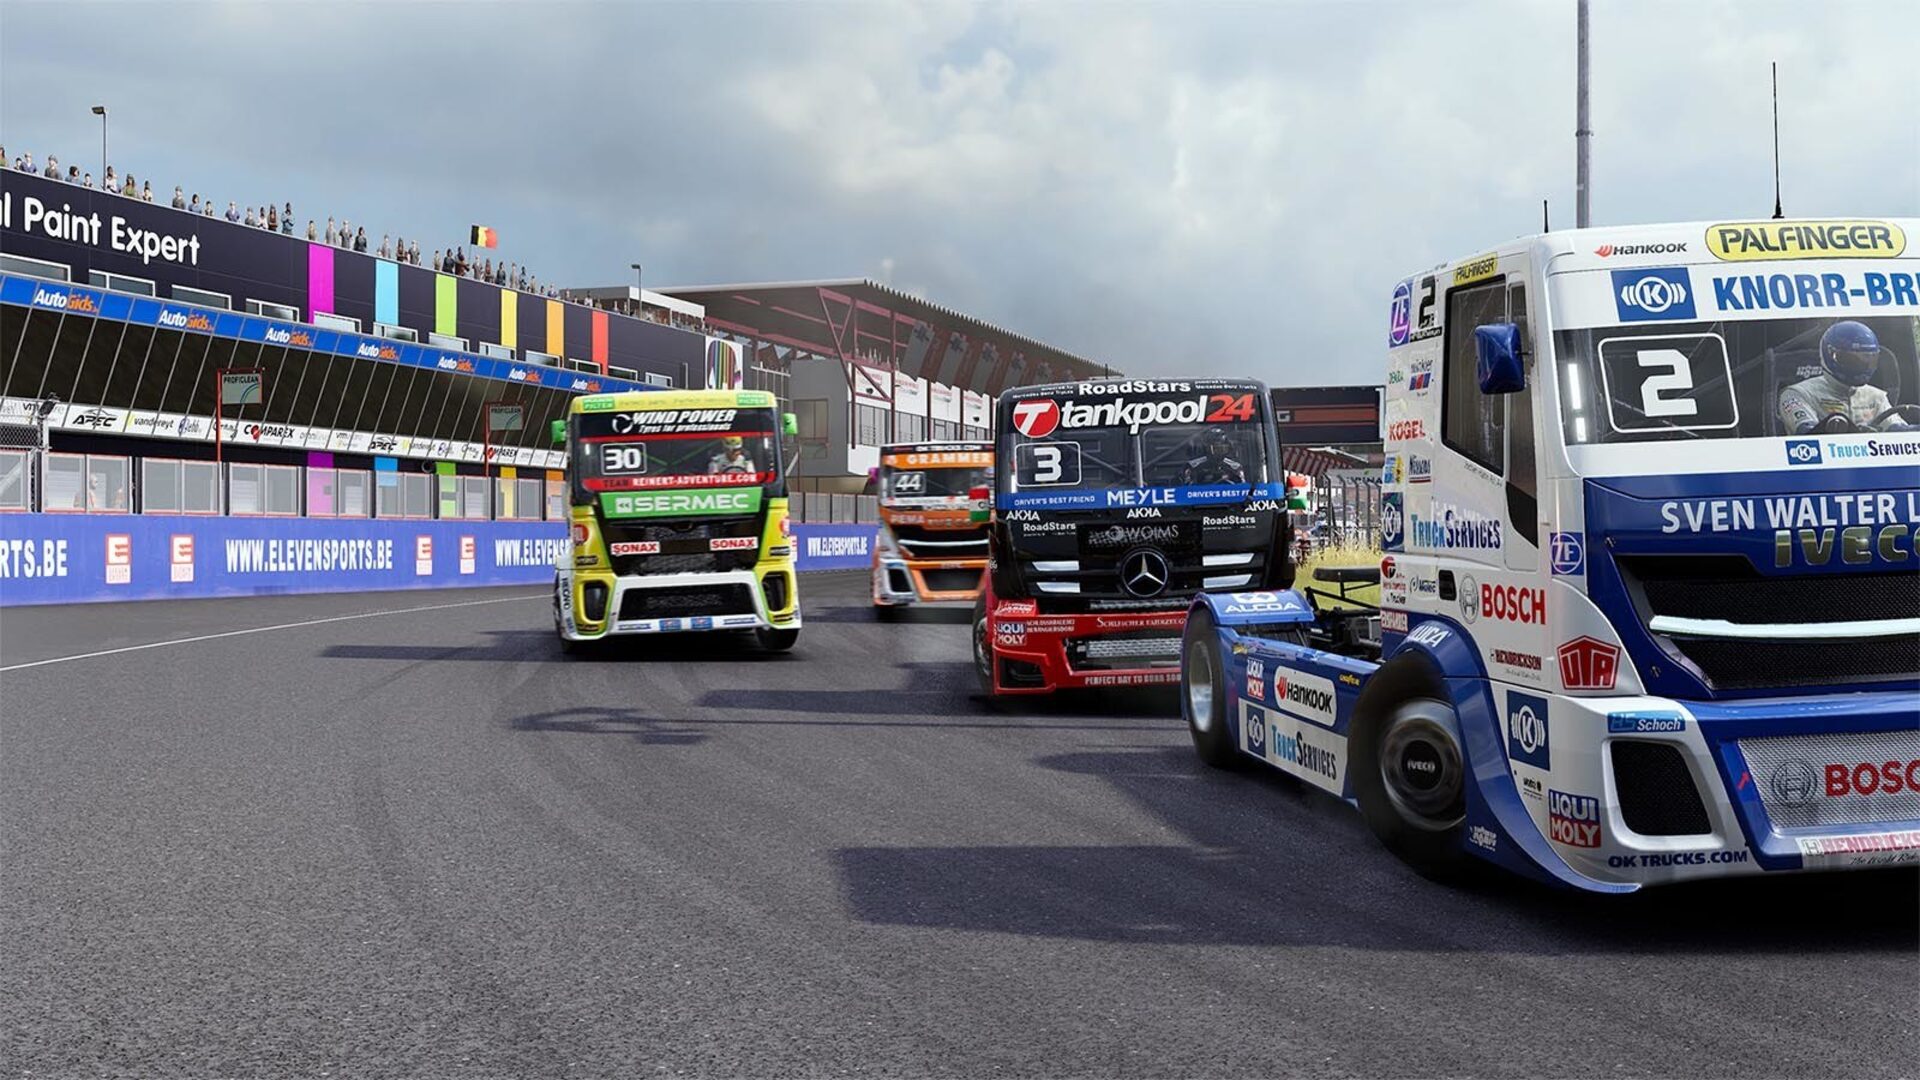 Truck Racing Championship - PS4 - Game Games - Loja de Games